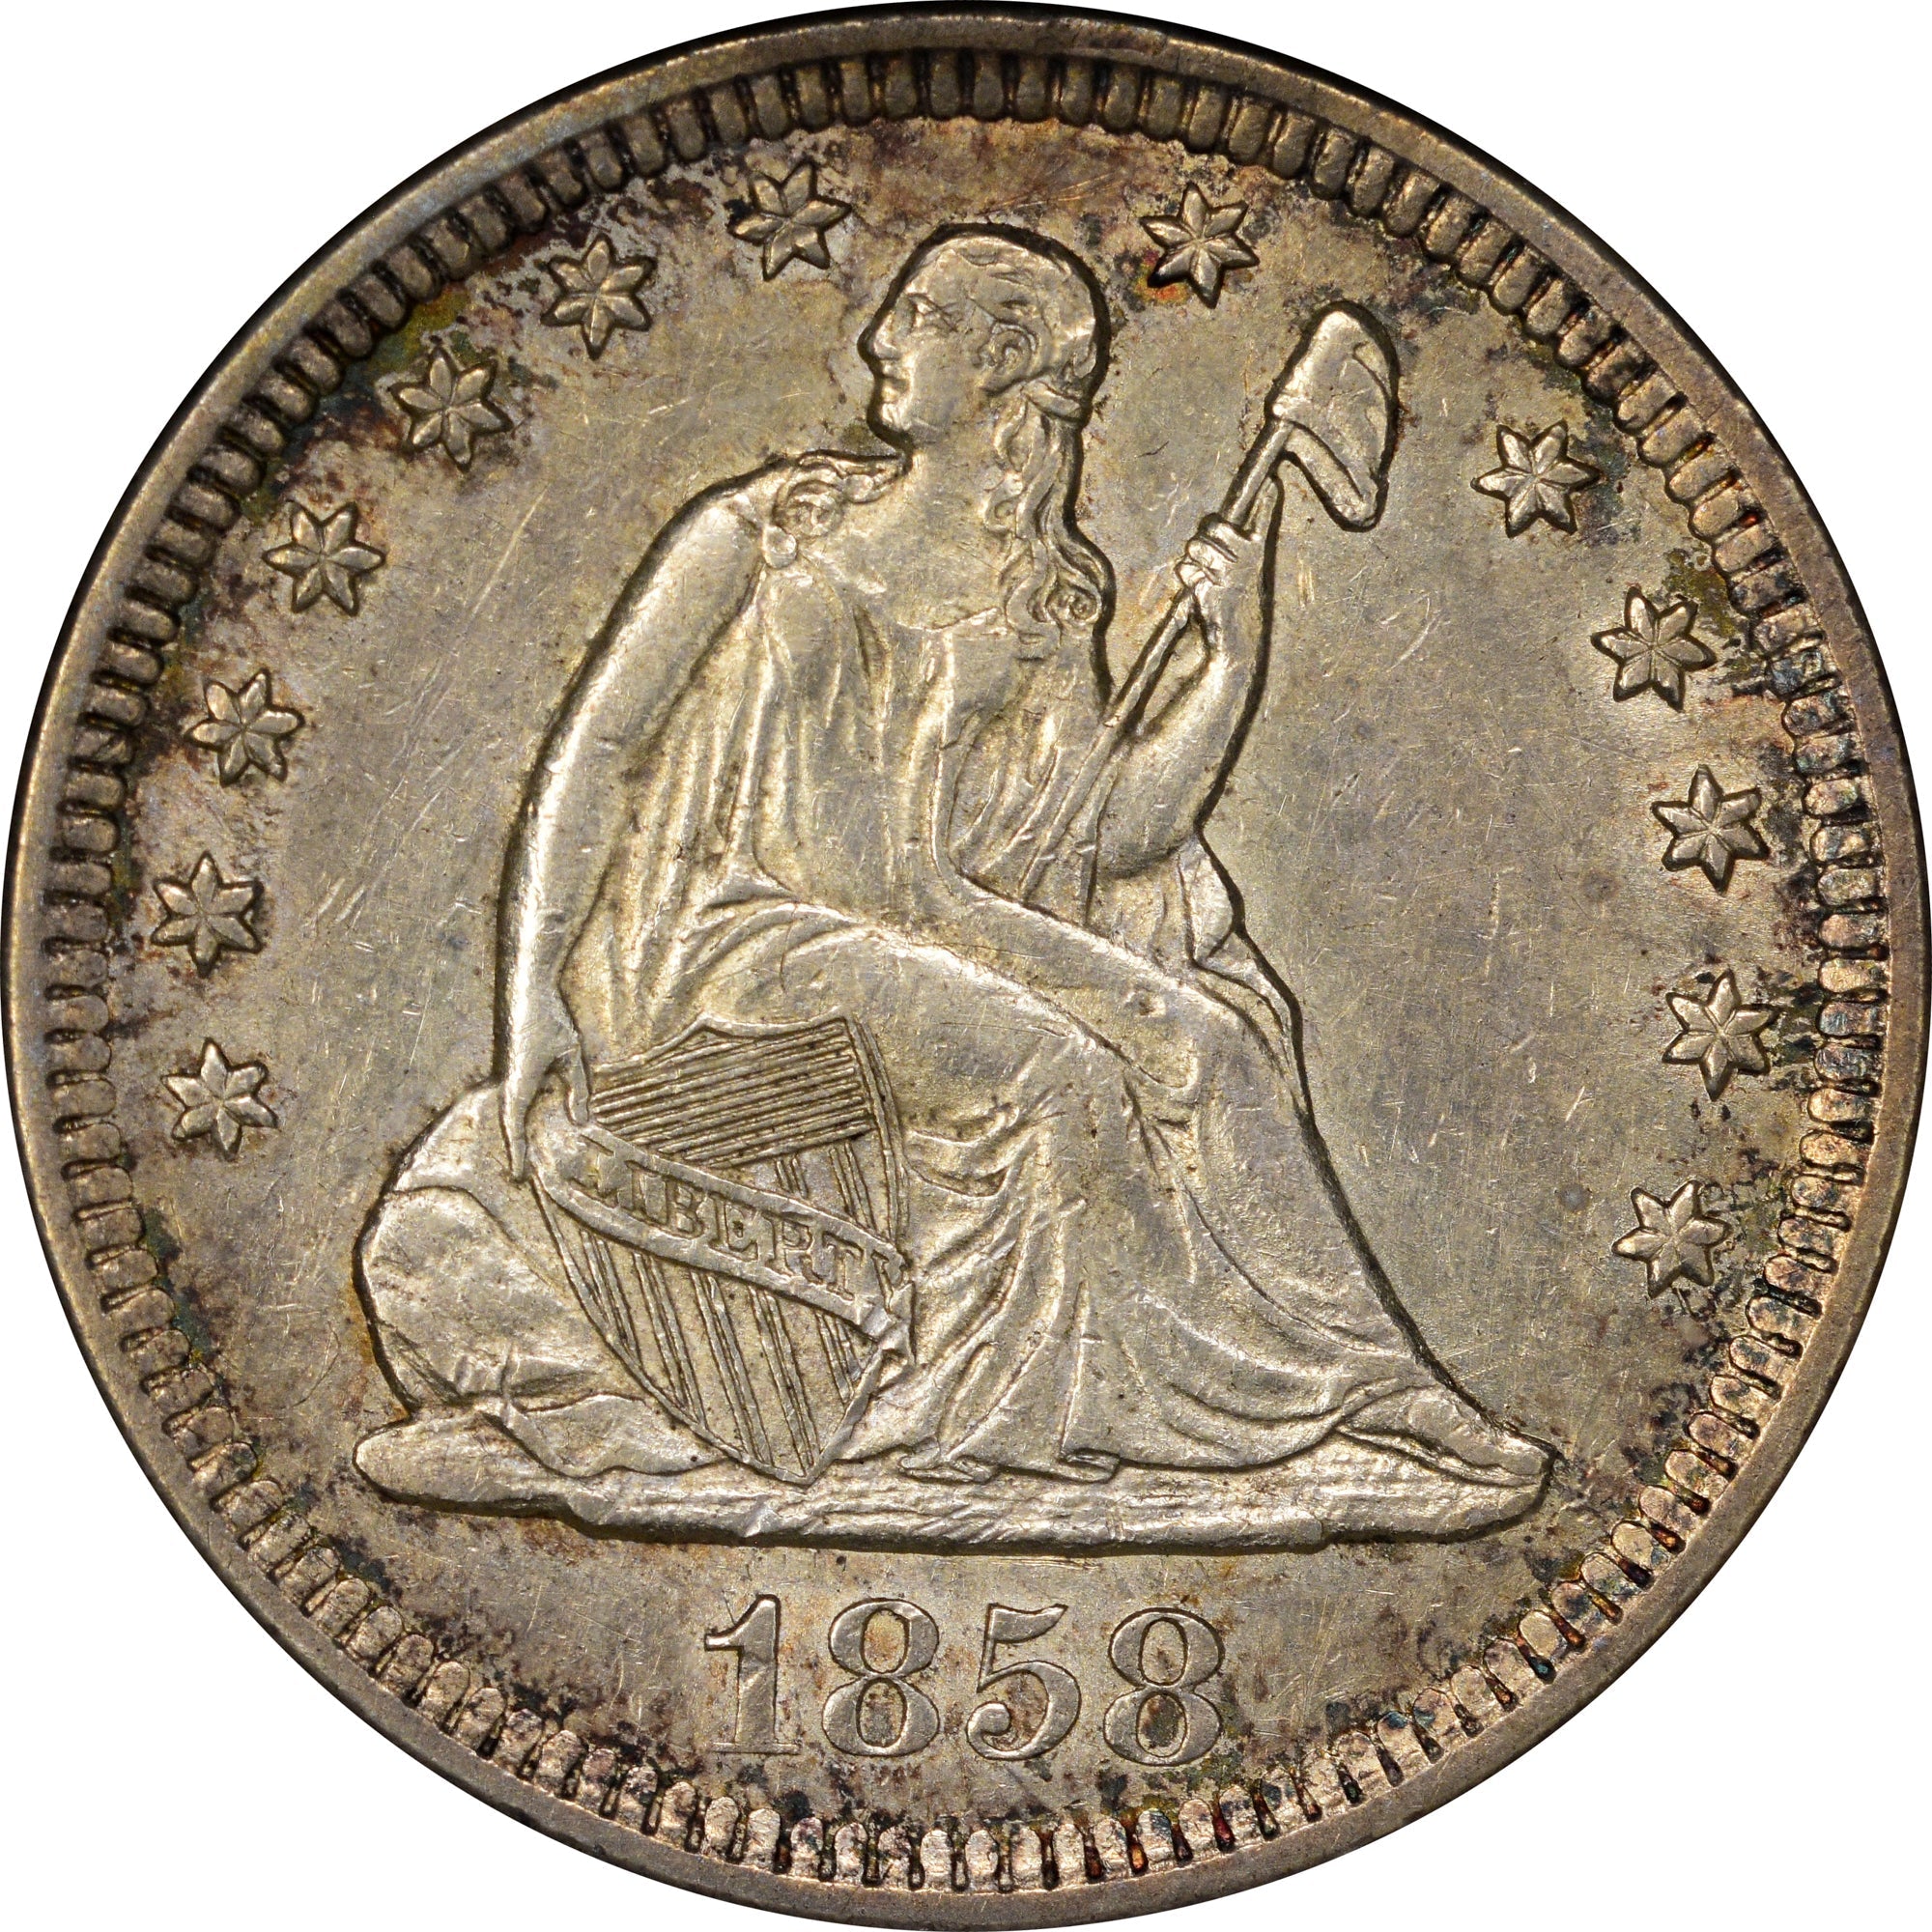 1858-O 25C AU58 NGC - Paradime Coins | PCGS NGC CACG CAC Rare US Numismatic Coins For Sale